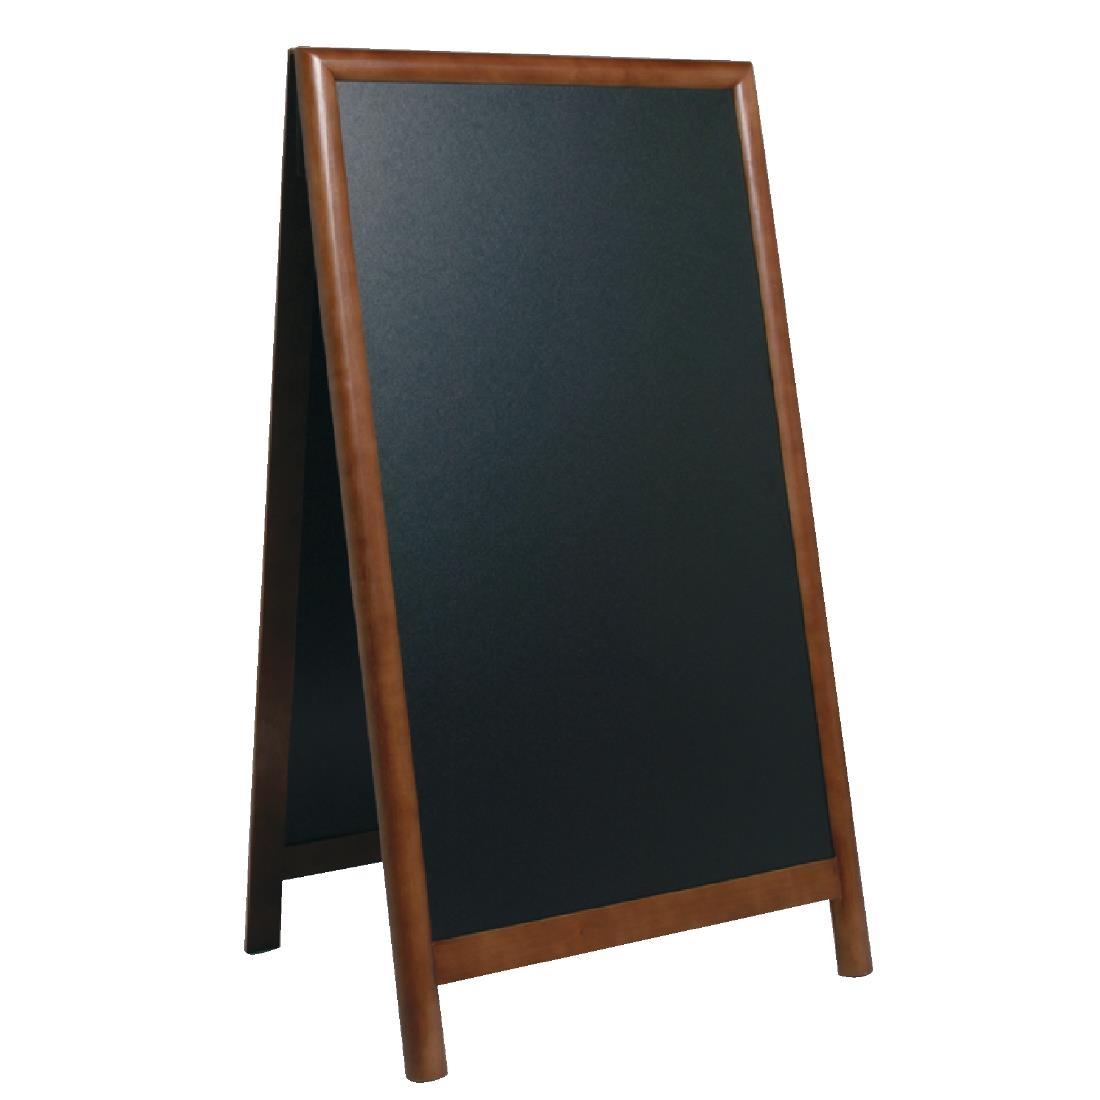 Securit Duplo Pavement Board 1250 x 705mm Dark Wood - CE431  - 1